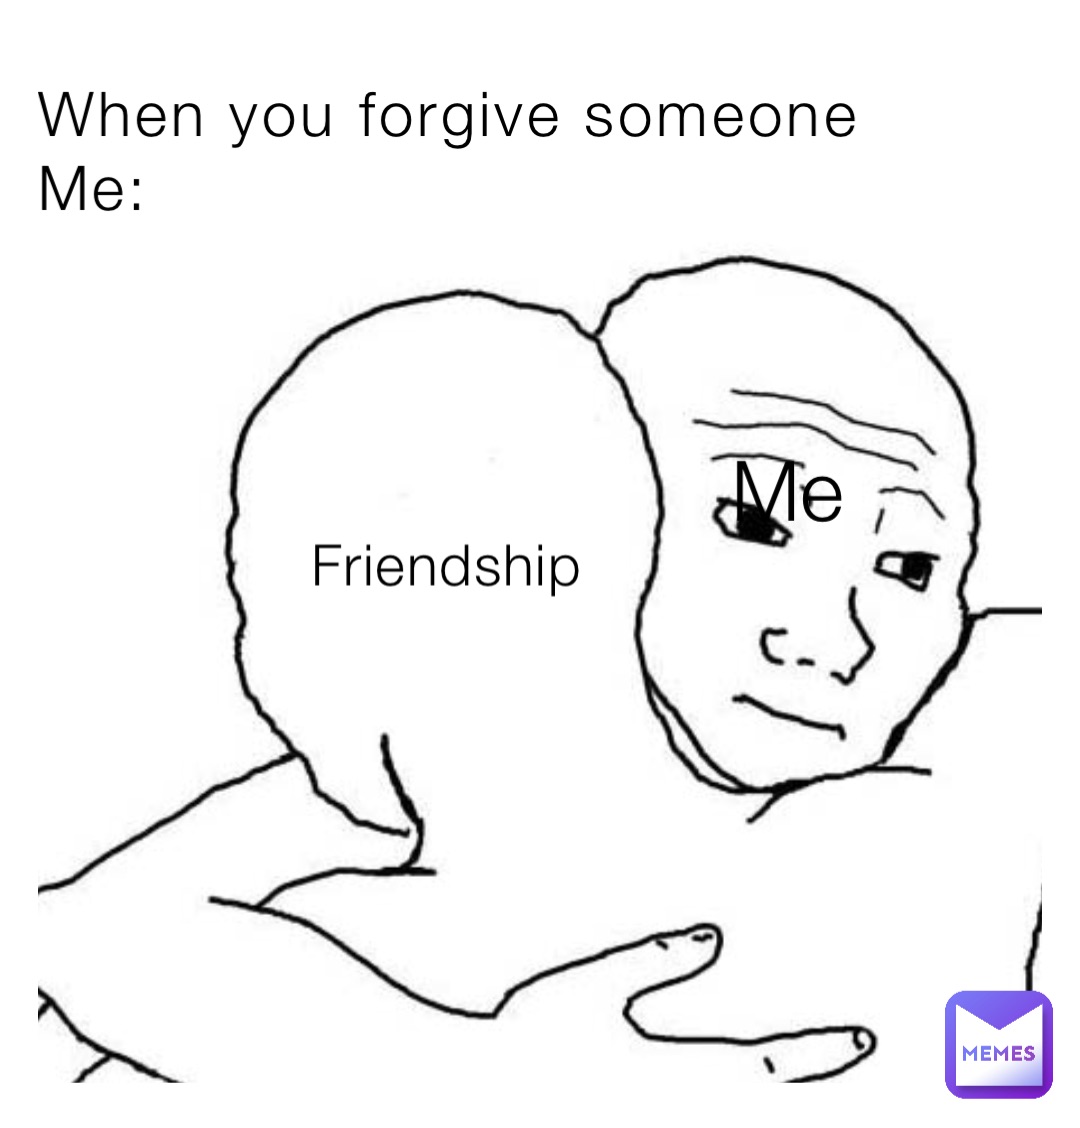 When you forgive someone
Me: Friendship Me